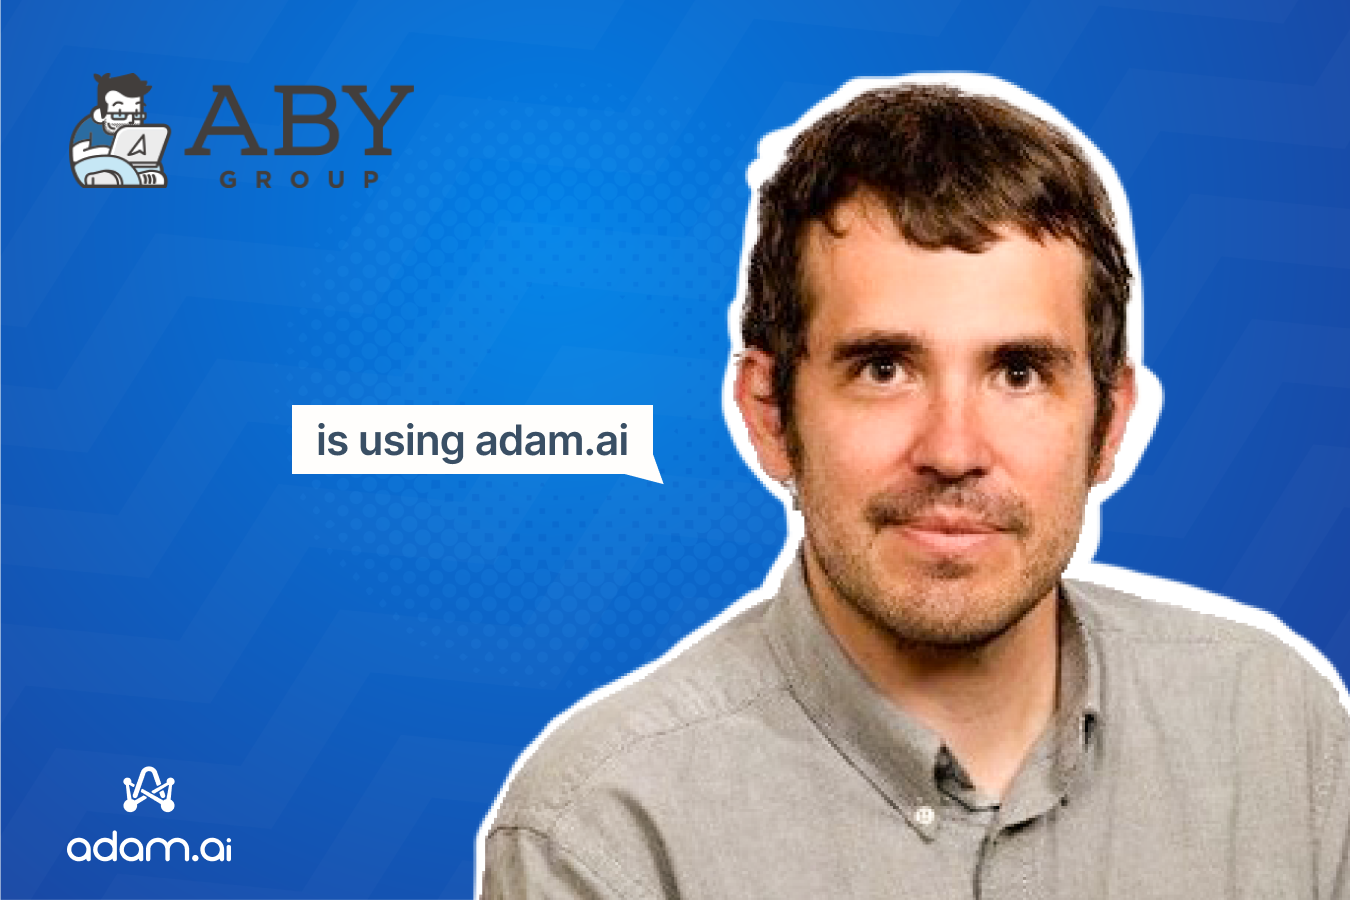 adam.ai and ABY Group success story - Enrique Aldaz